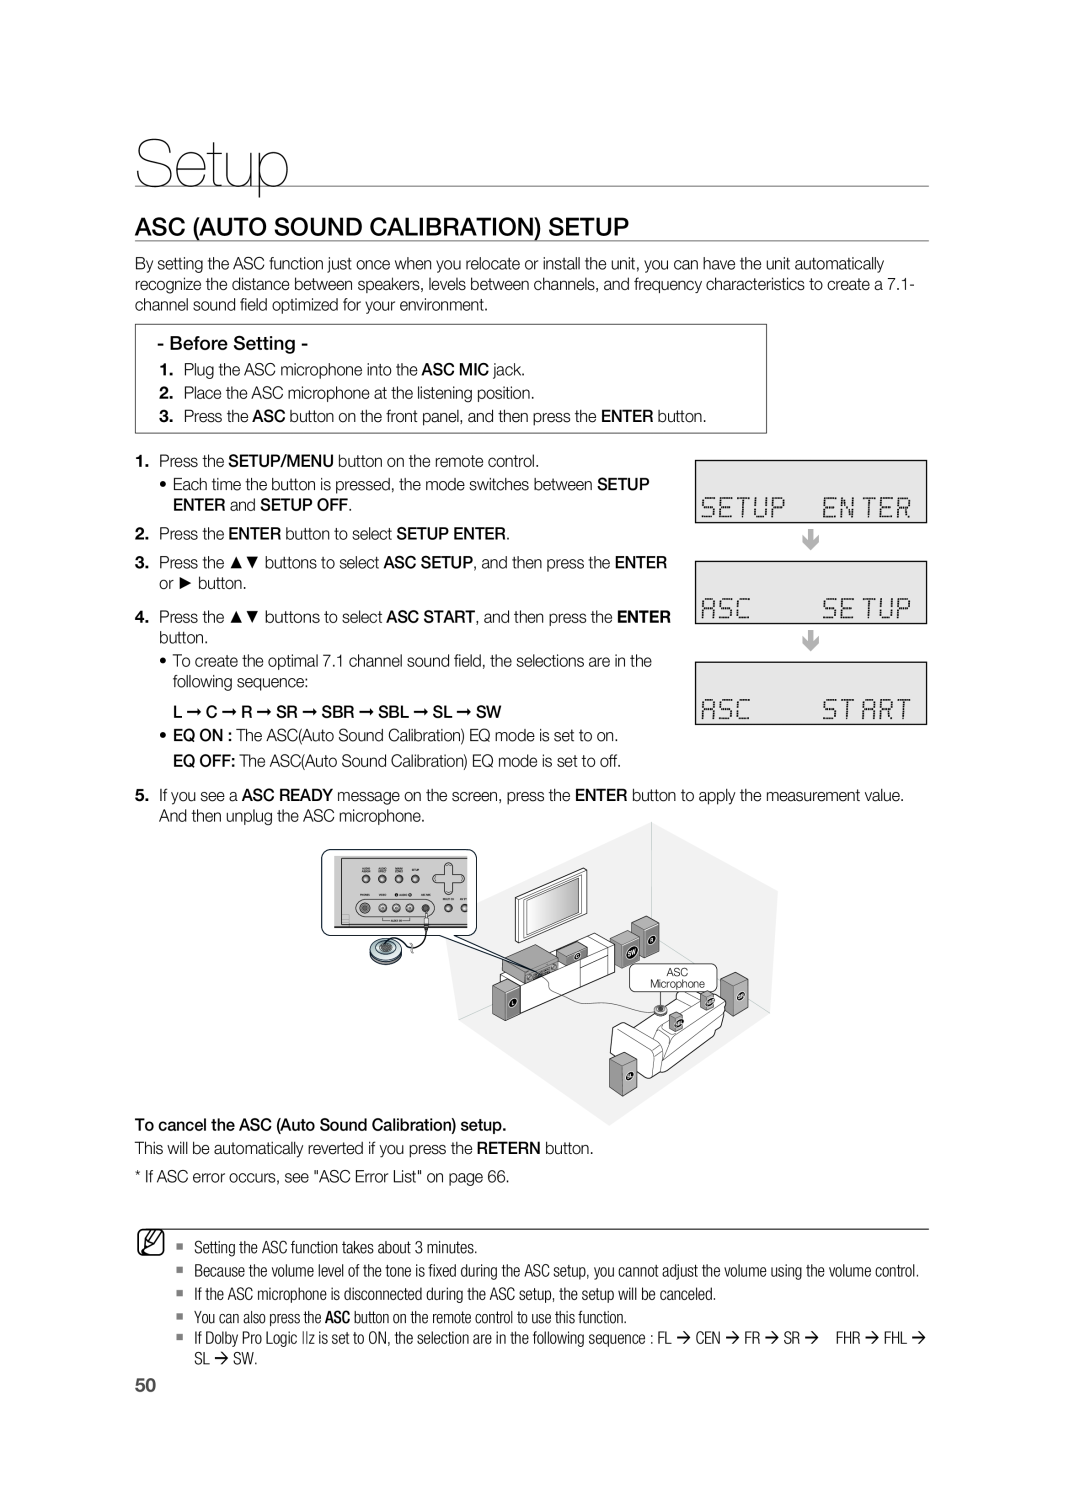 Samsung HW-C900-XAA user manual Asc Auto Sound Calibration Setup, Before Setting 